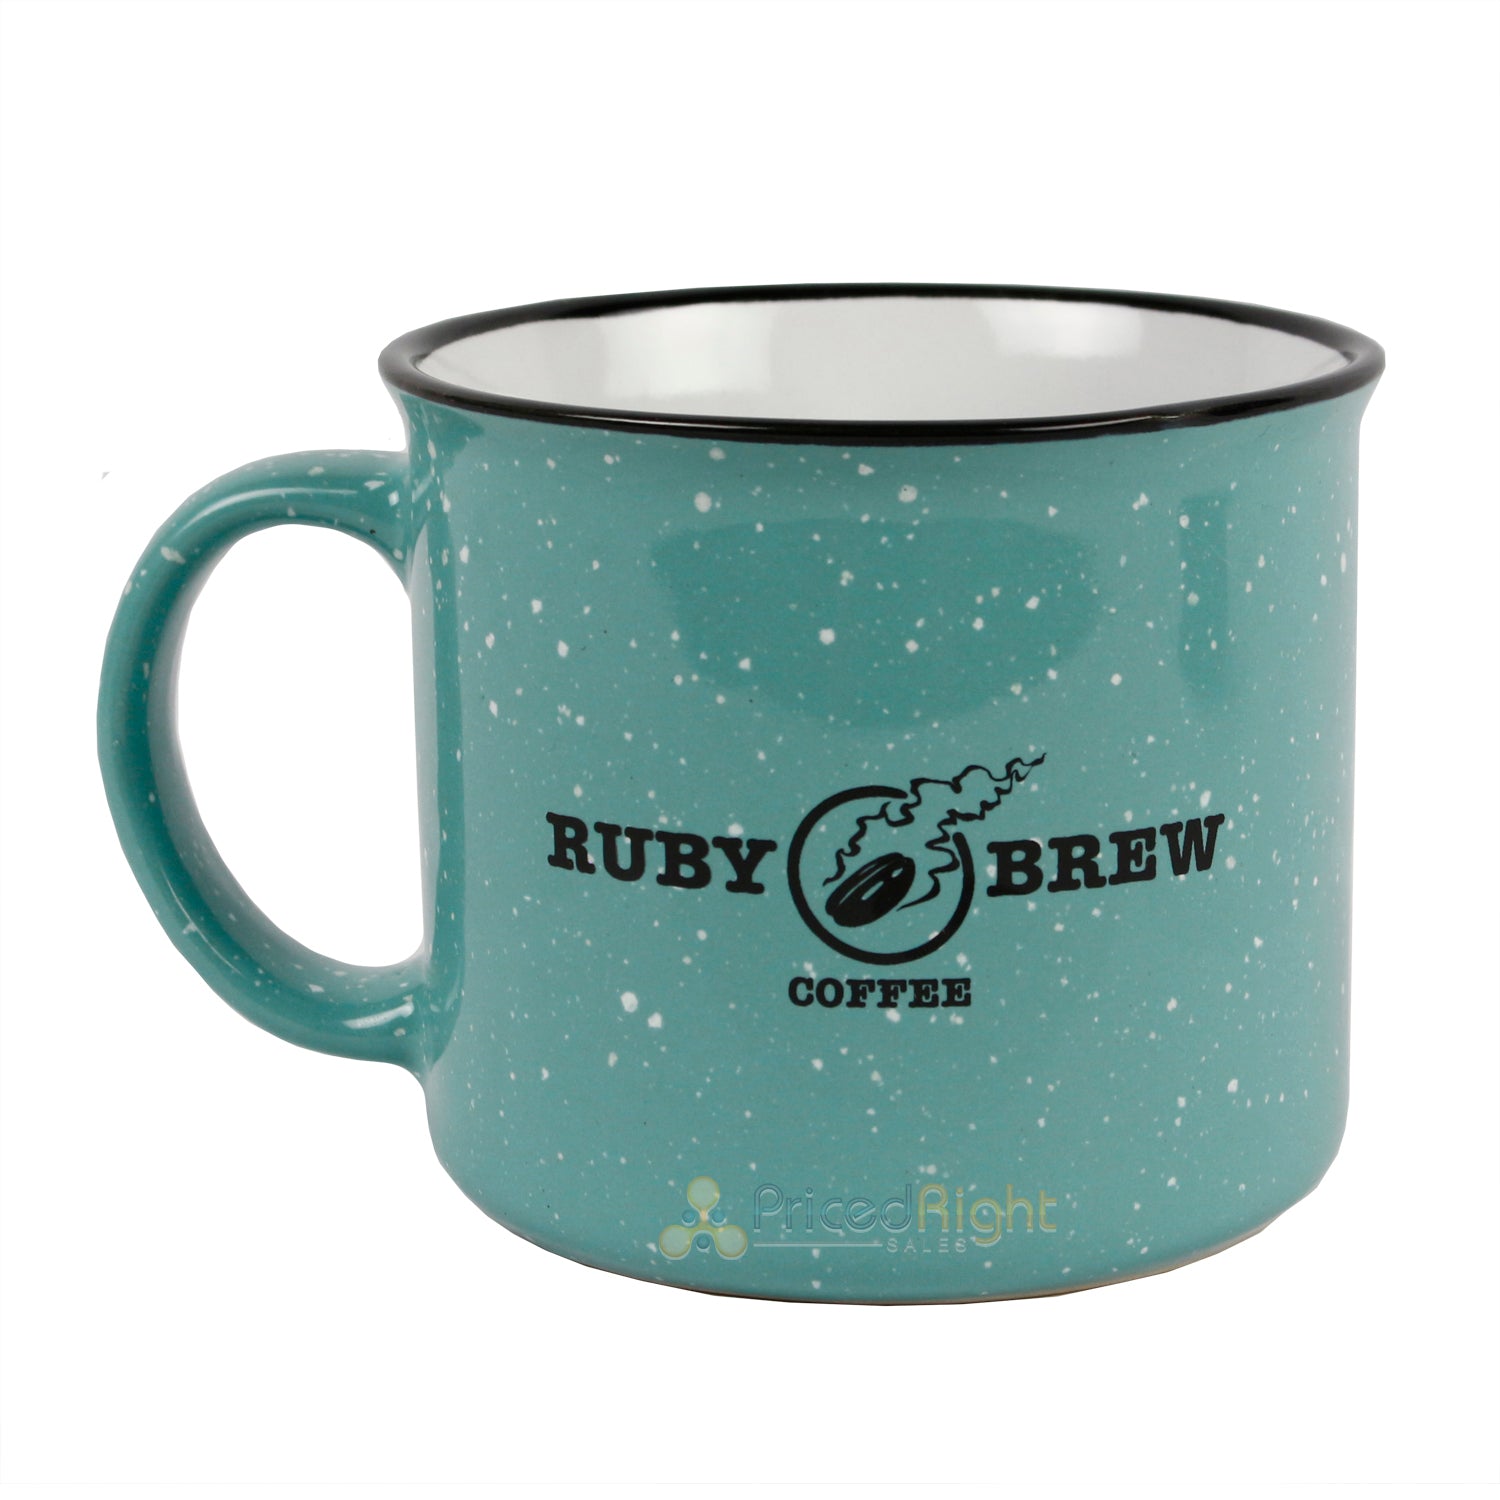 Ruby Brew Campfire Ceramic Microwave-Safe Mug With Handle 13 Oz. Speckled Teal